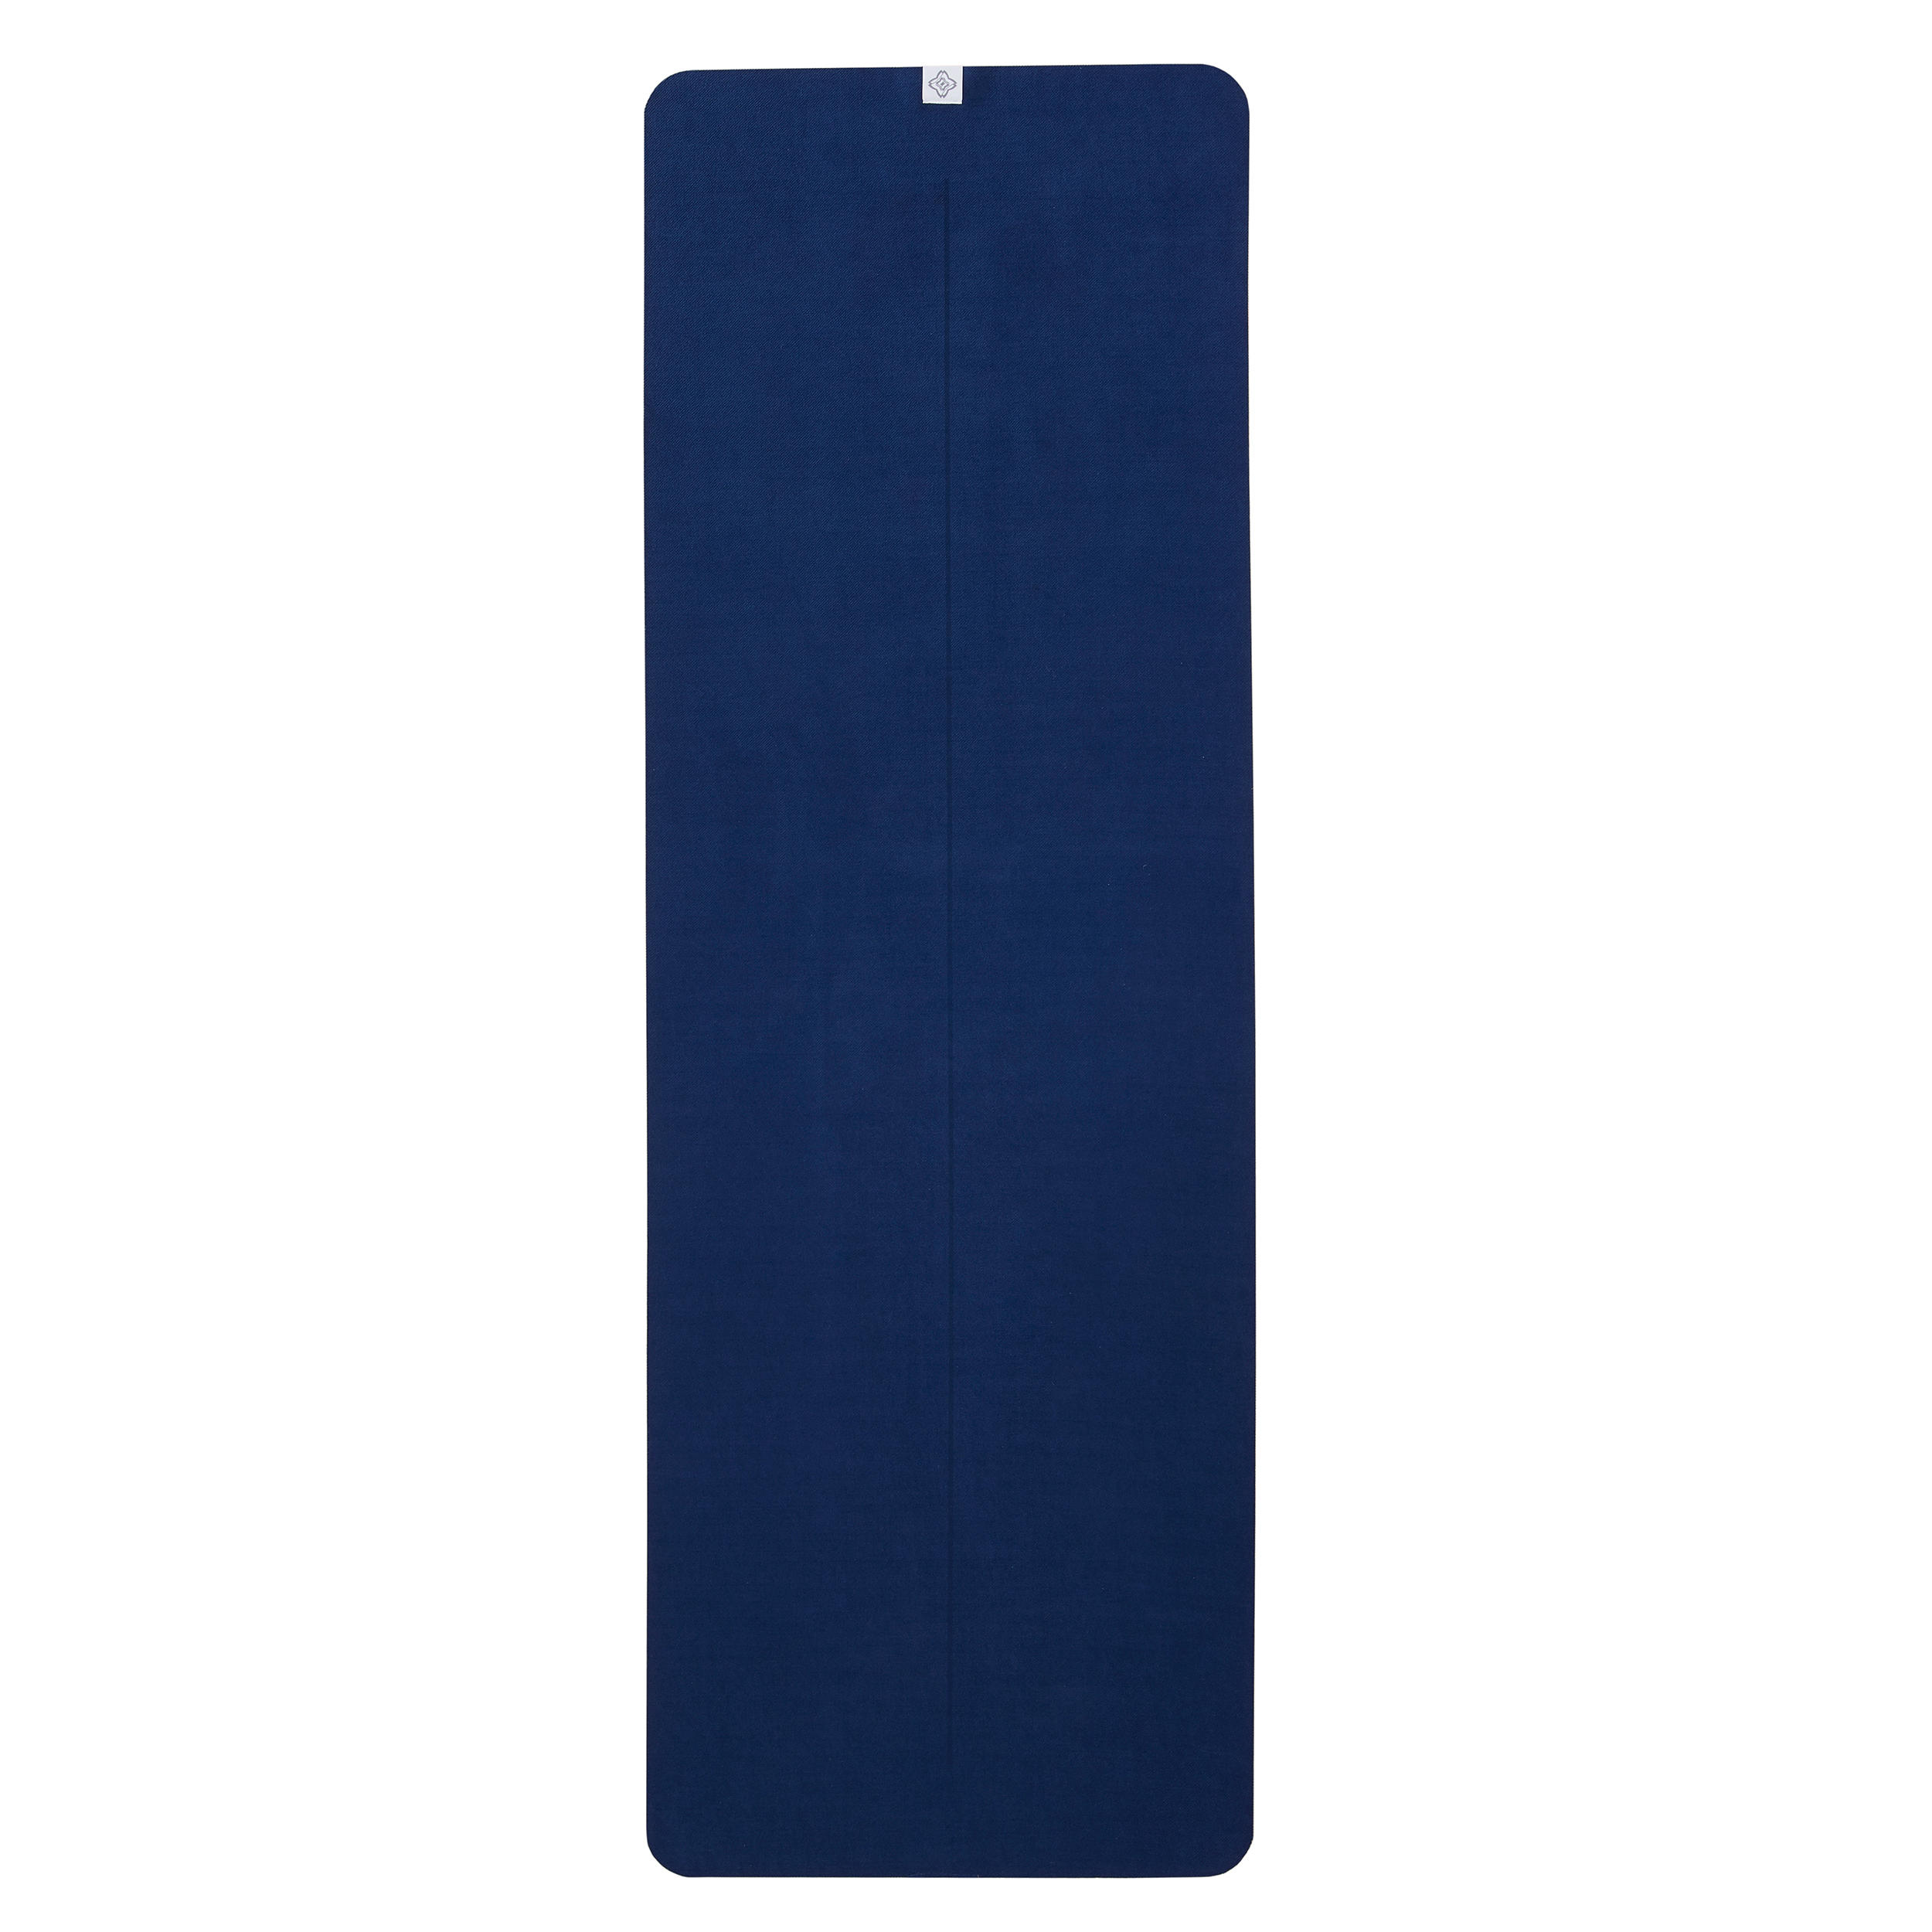 Anti-Slip Yoga Mat Towel Cover for Yoga Gym - Absorbent, Durable, and  Non-Slip Fitness Exercise Blanket - 183x63cm Sky Blue Plum Design